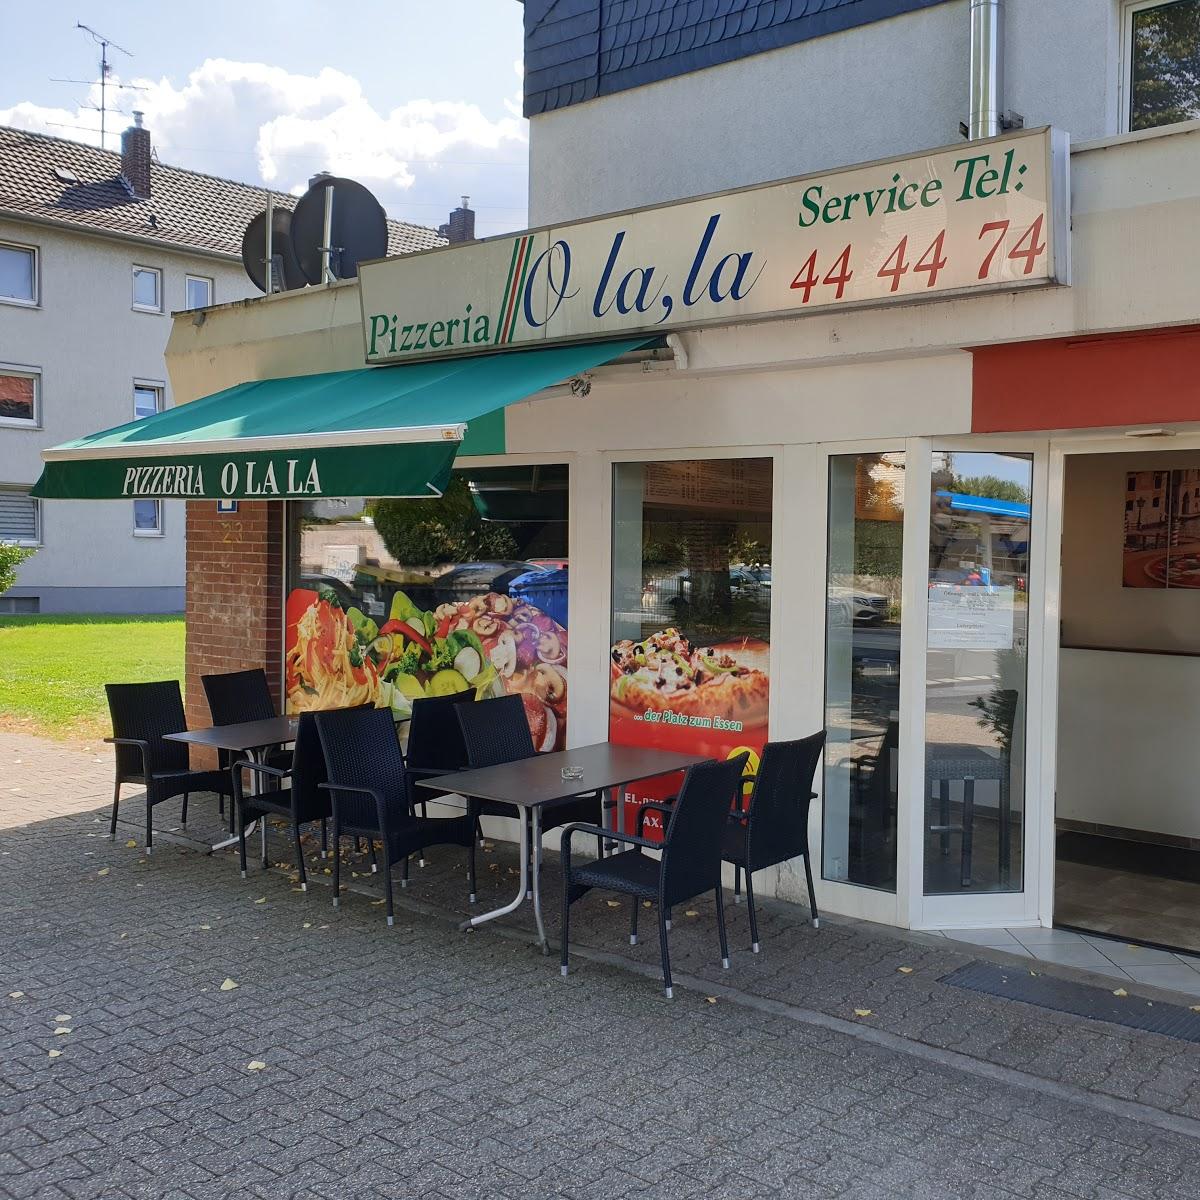 Restaurant "Pizzeria O La La" in  Ratingen